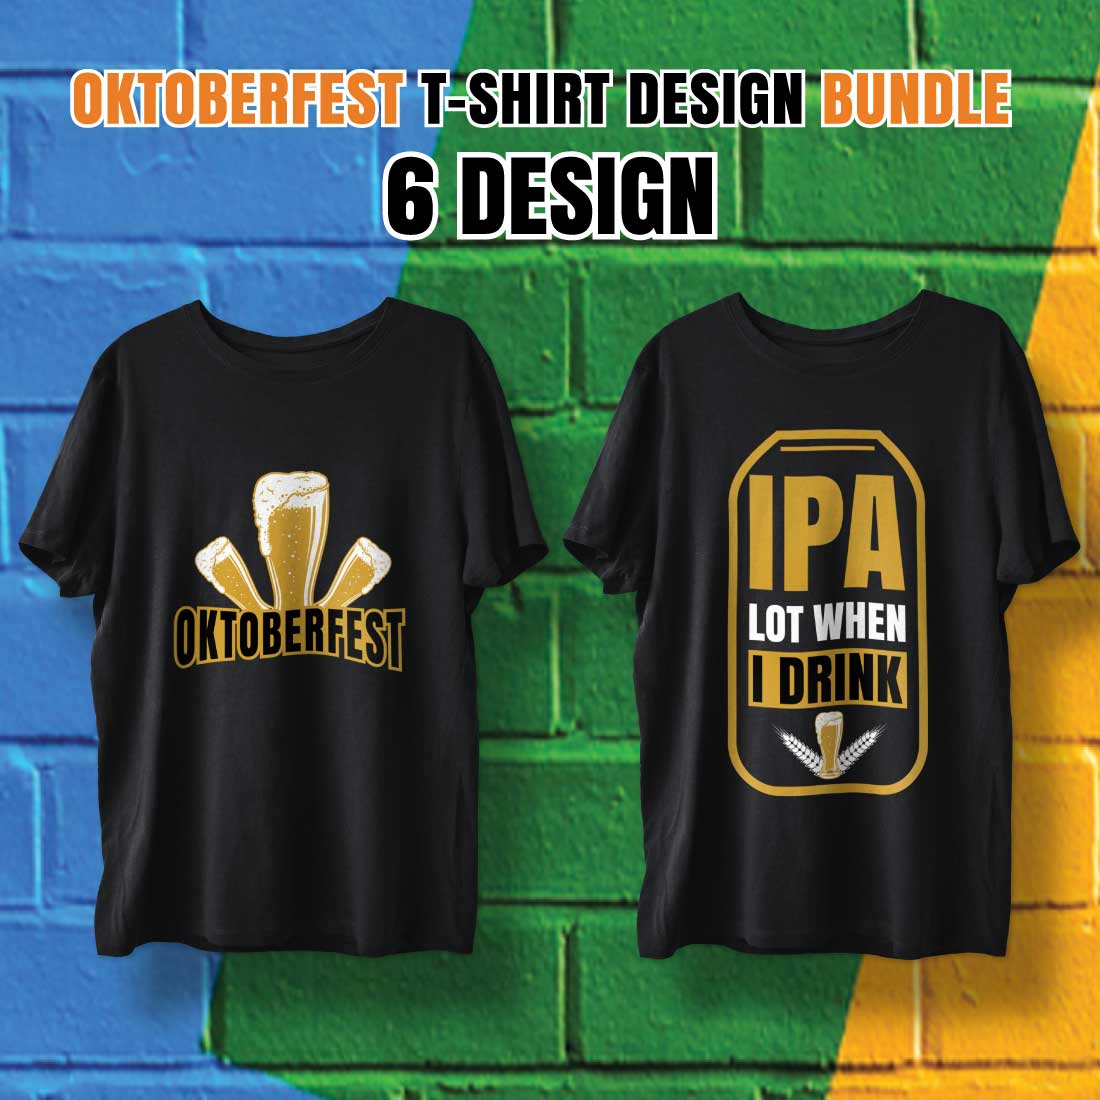 6 Print Ready Oktoberfest T-Shirt Design Bundle facebook image.